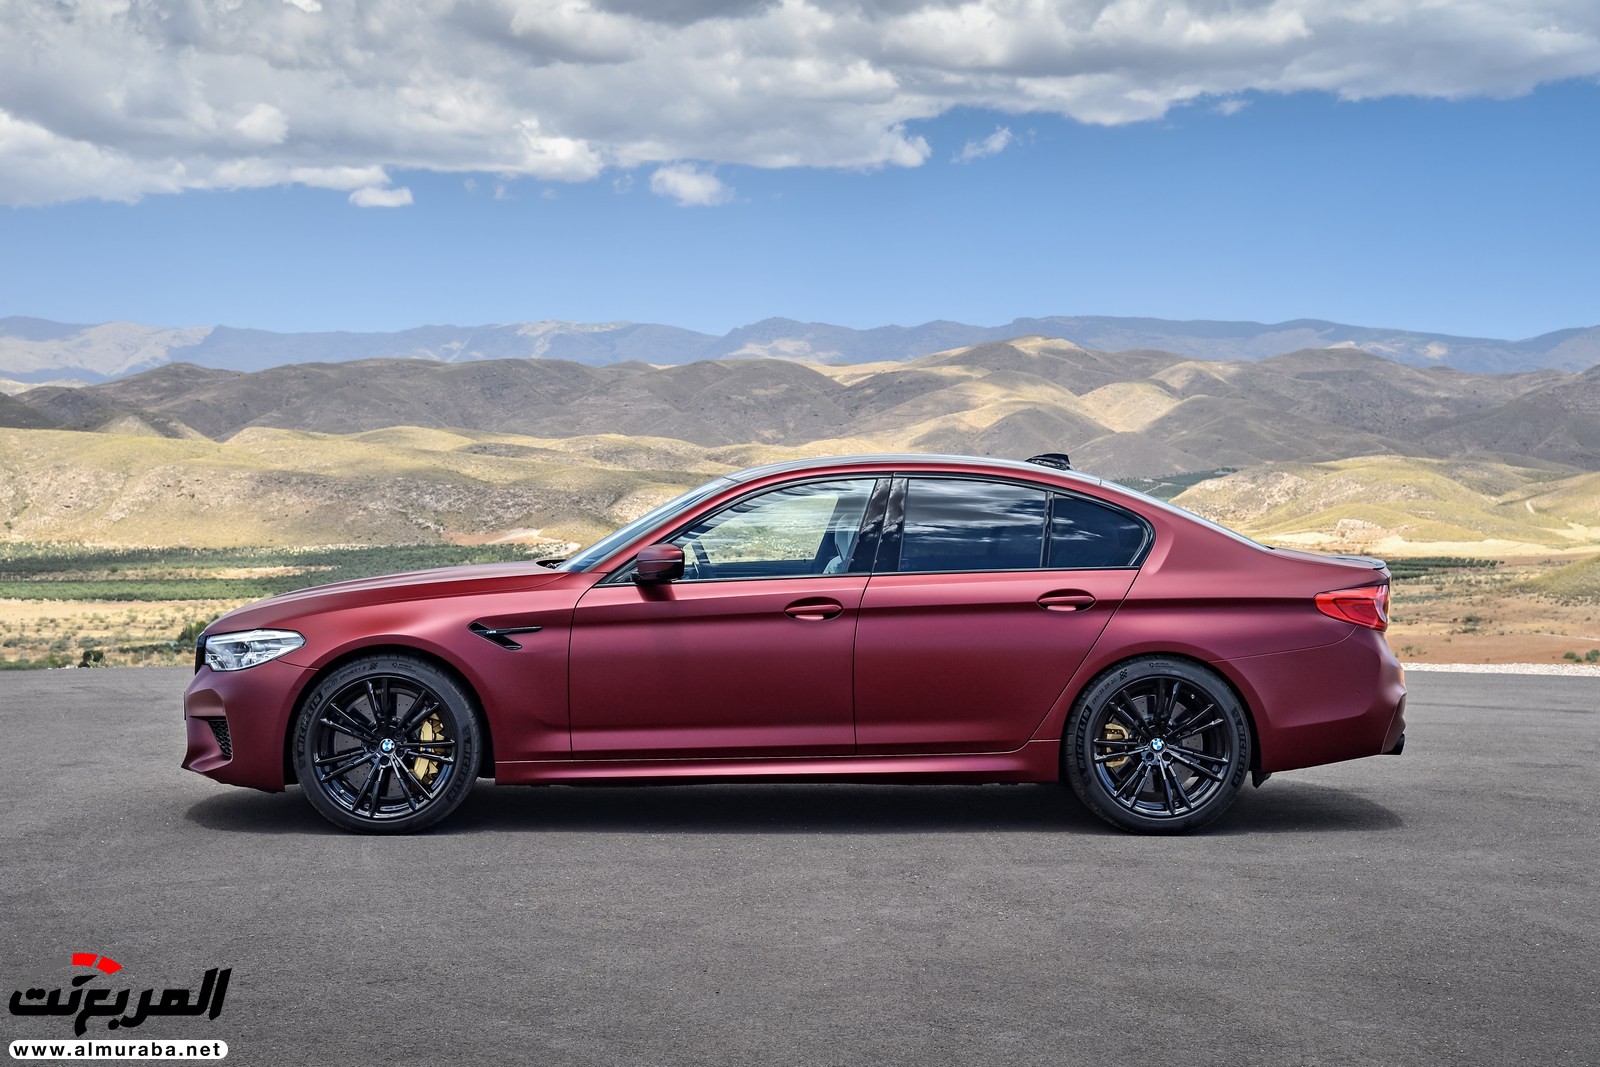 بي ام دبليو M5 2018 تكشف نفسها رسمياً بقوة ٦٠٠ حصان "صور ومواصفات" BMW 40